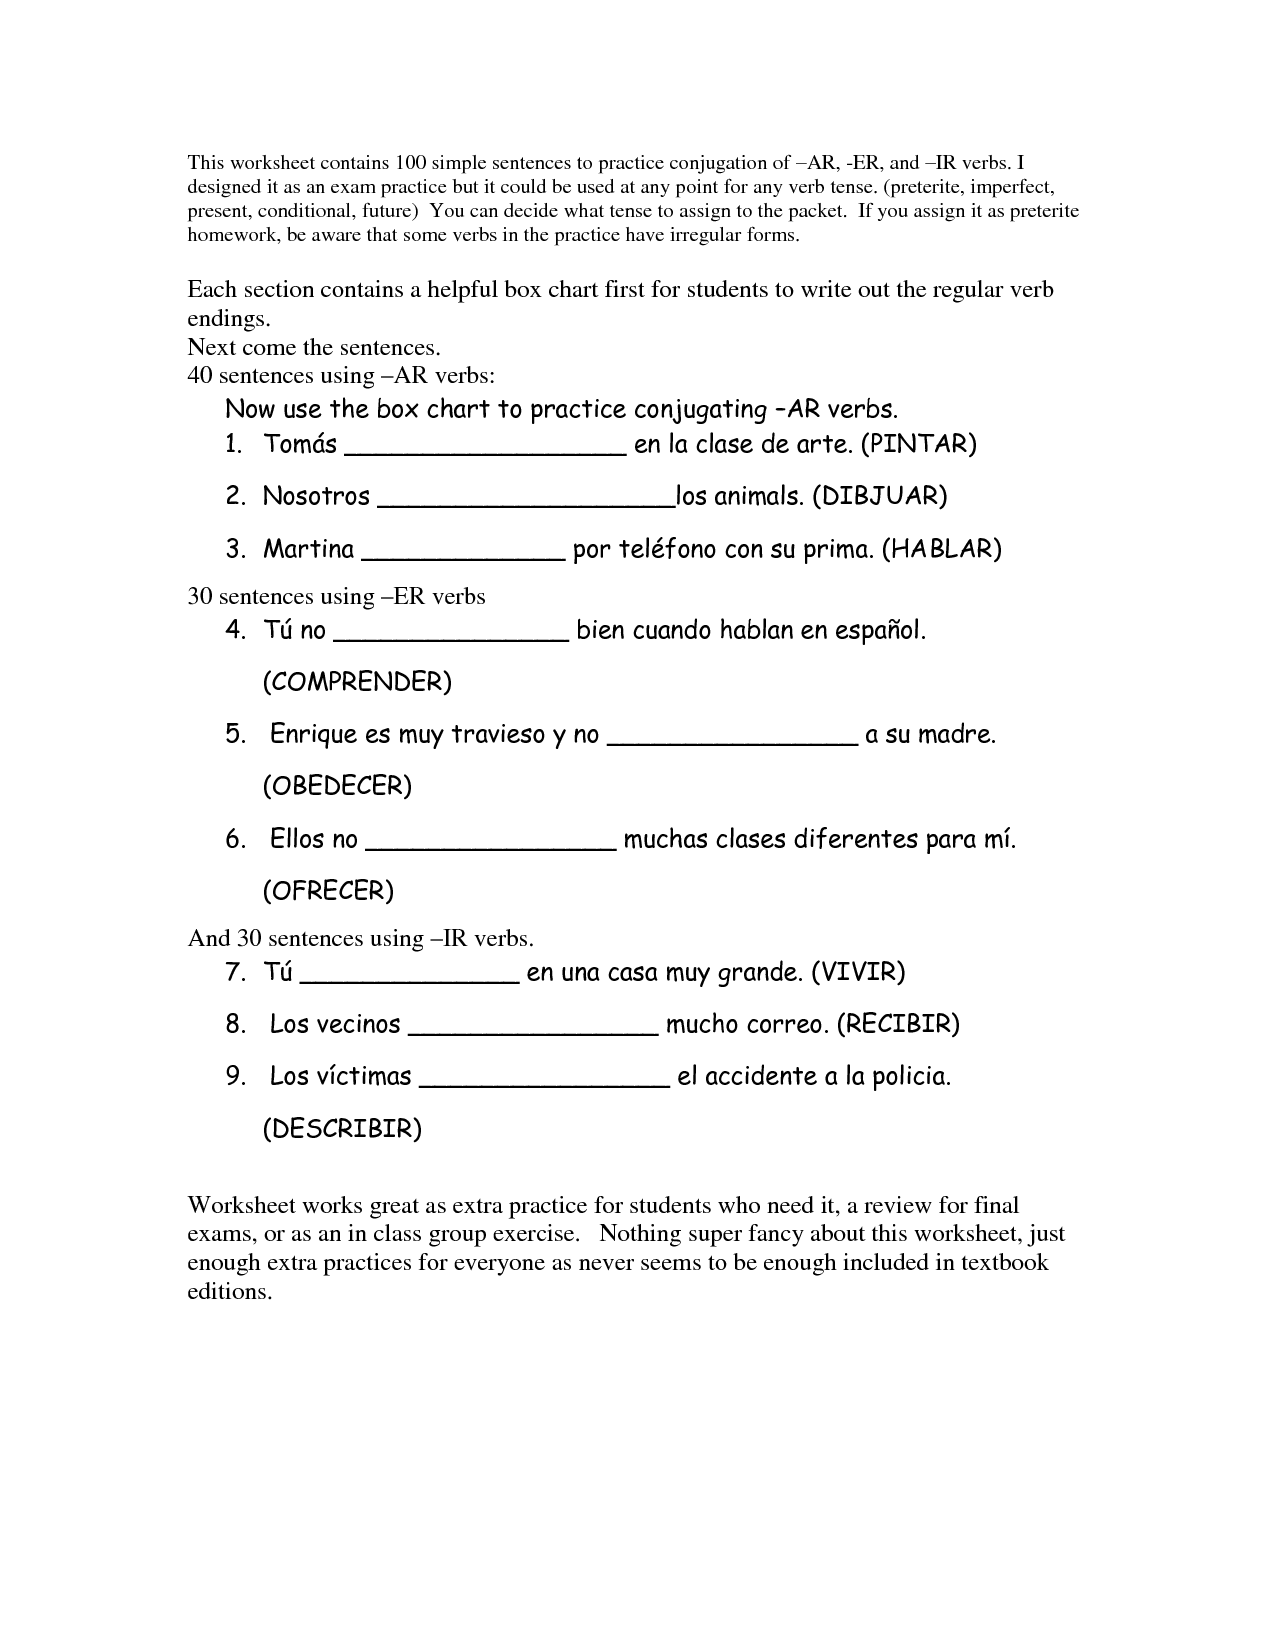 quiz-worksheet-present-tense-conjugations-of-ir-verbs-in-spanish-study